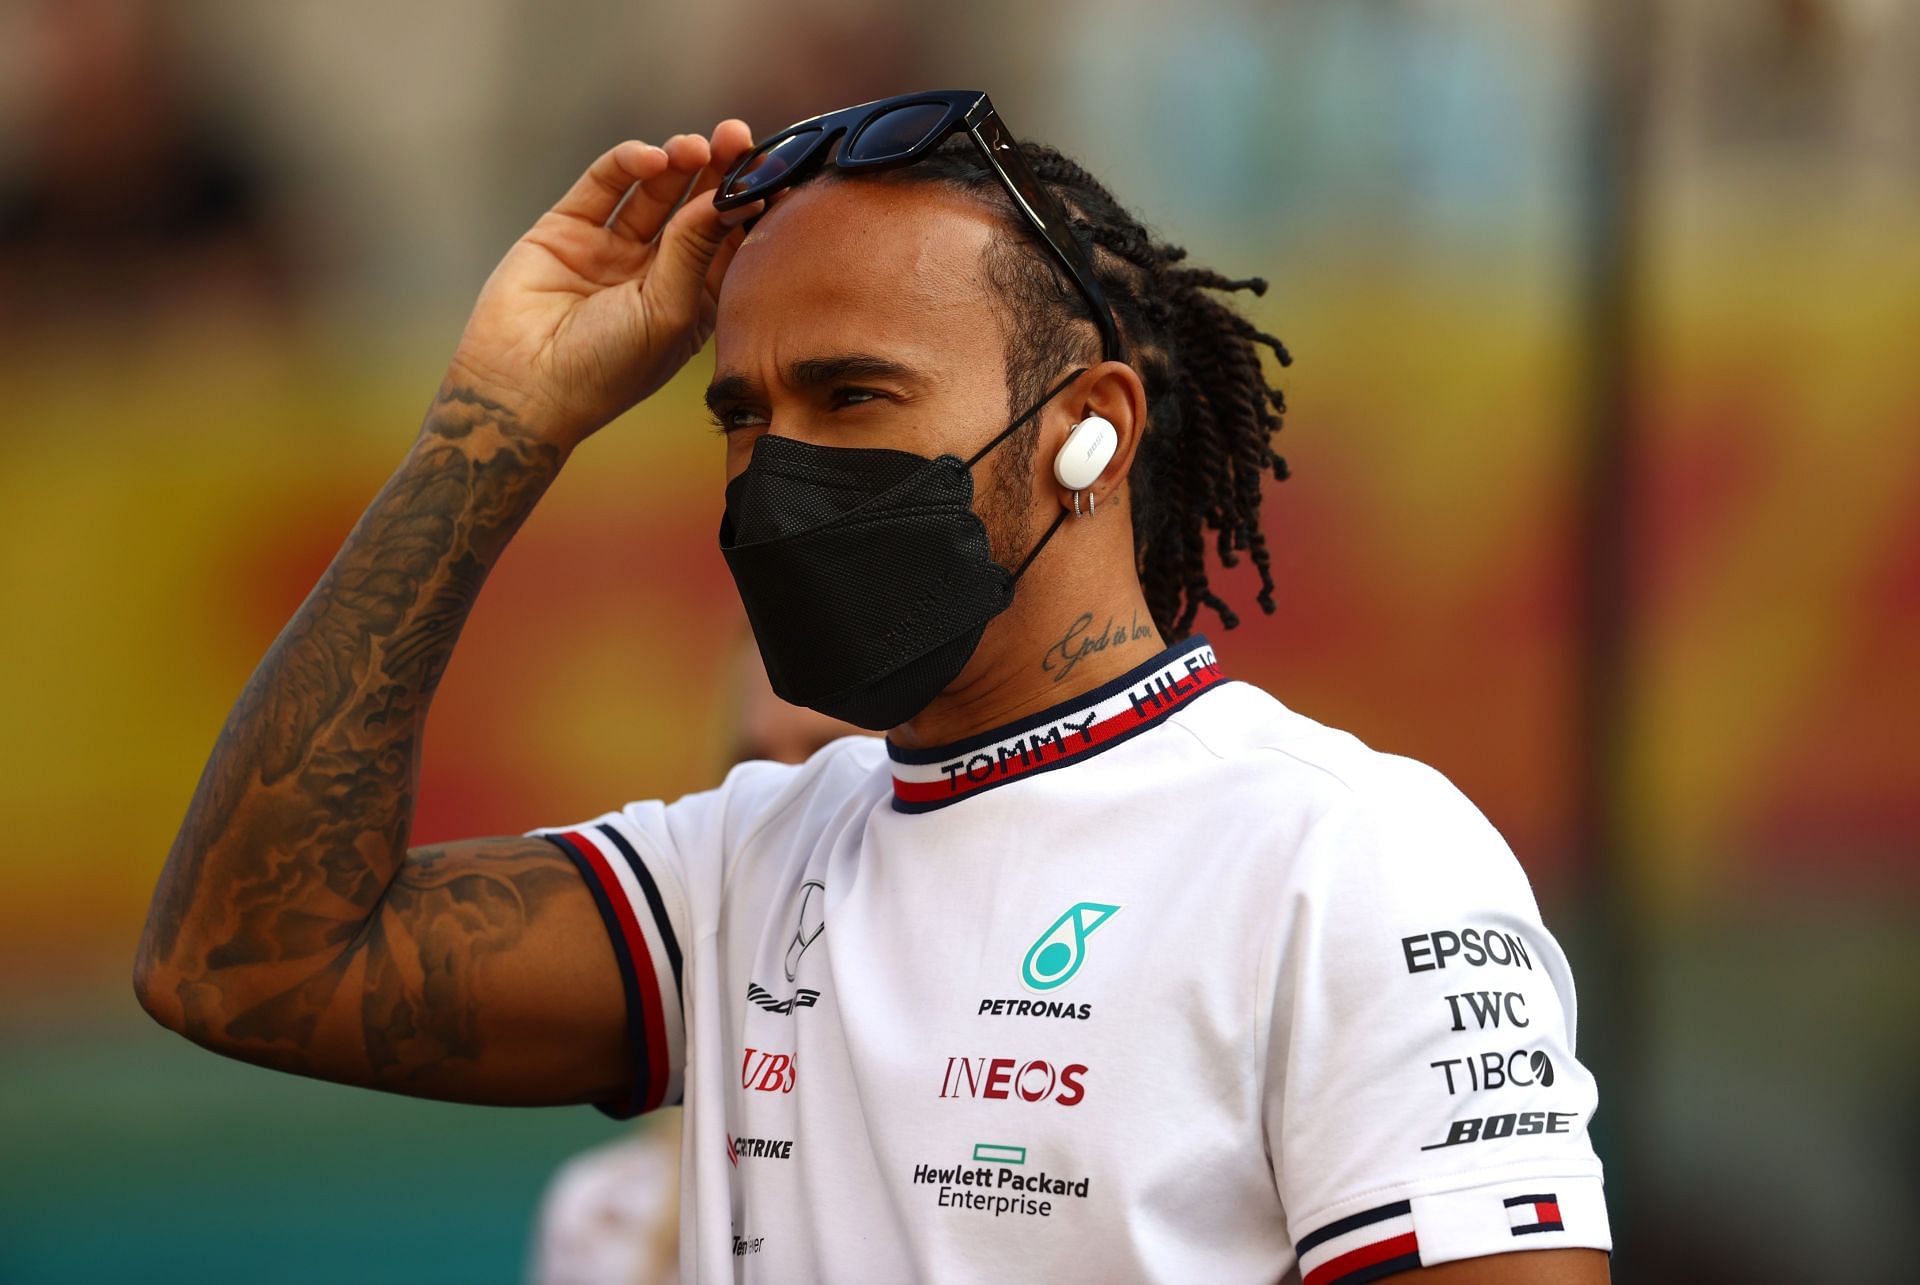 Lewis Hamilton at the Grand Prix of Abu Dhabi